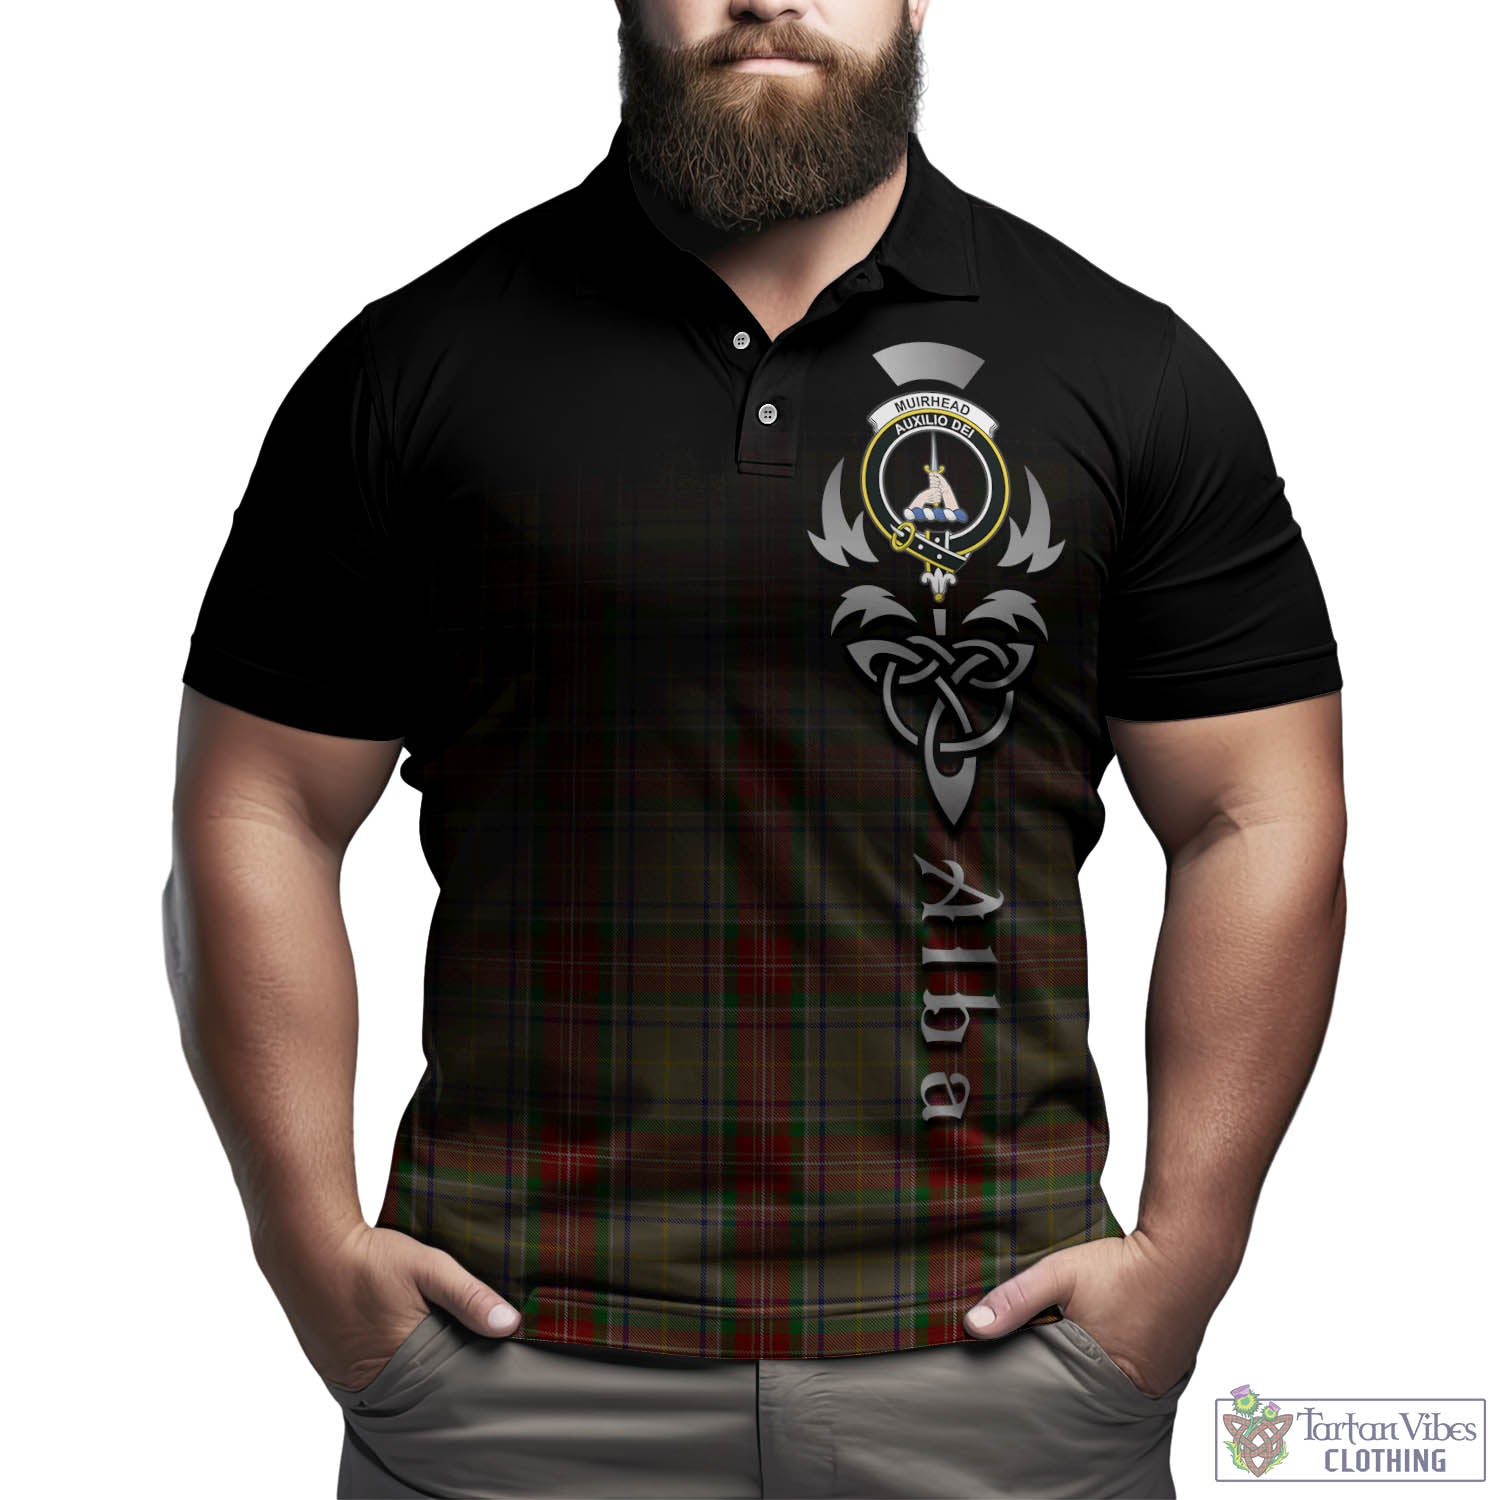 Tartan Vibes Clothing Muirhead Old Tartan Polo Shirt Featuring Alba Gu Brath Family Crest Celtic Inspired